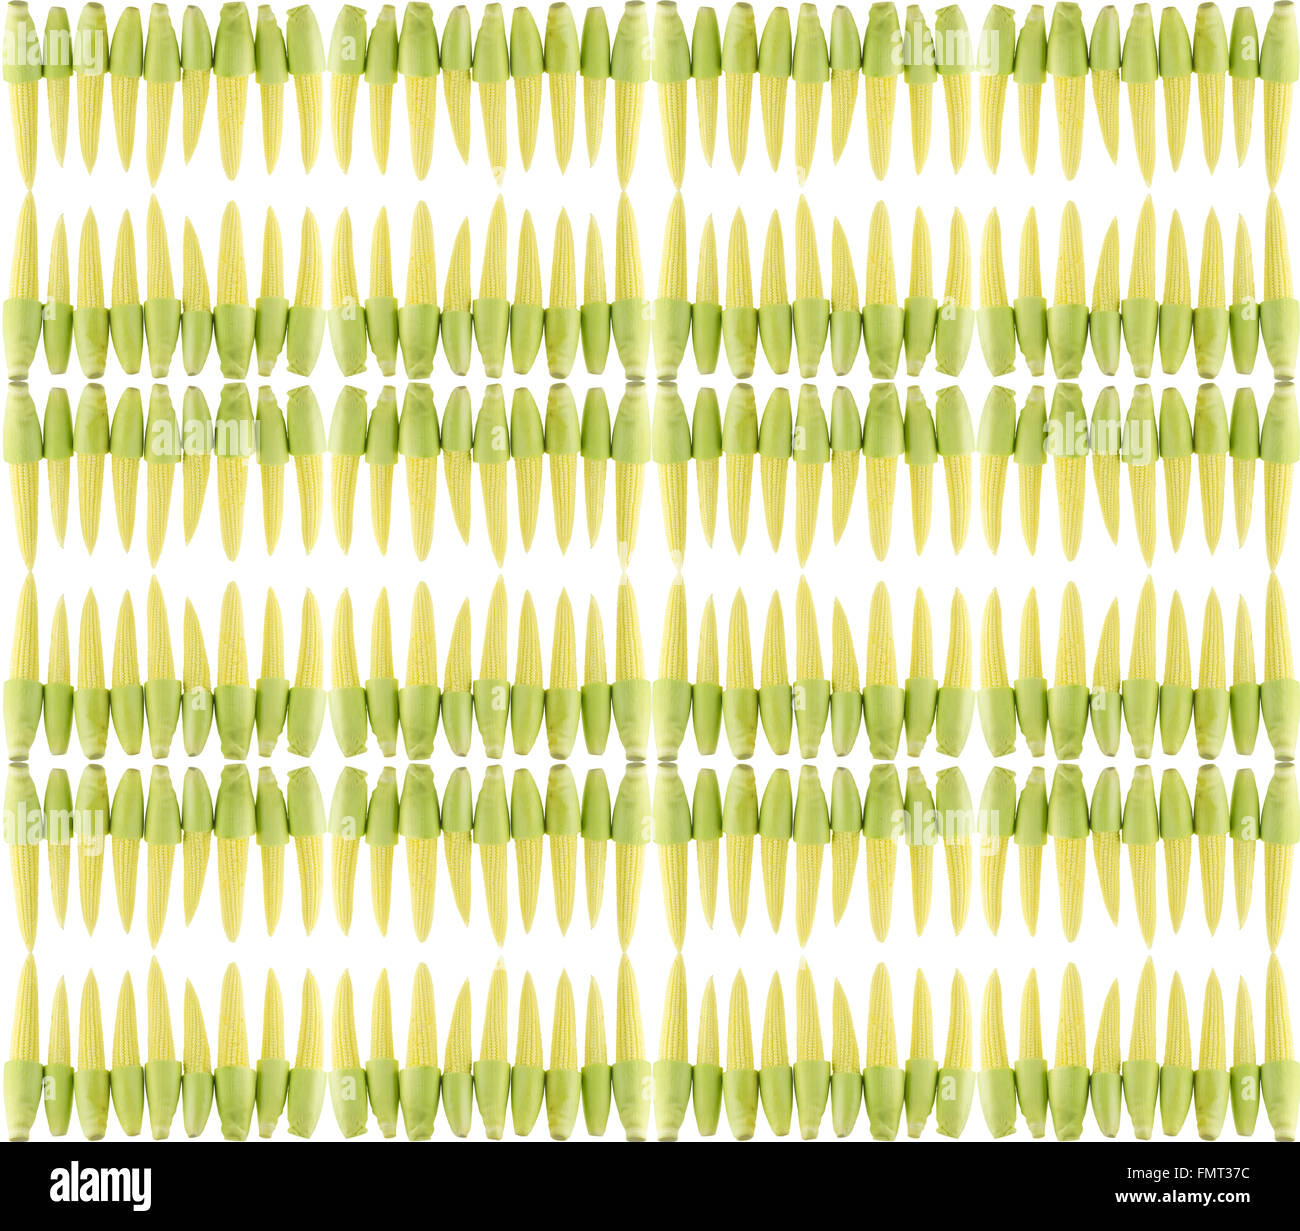 Baby corns seamless pattern background Stock Photo